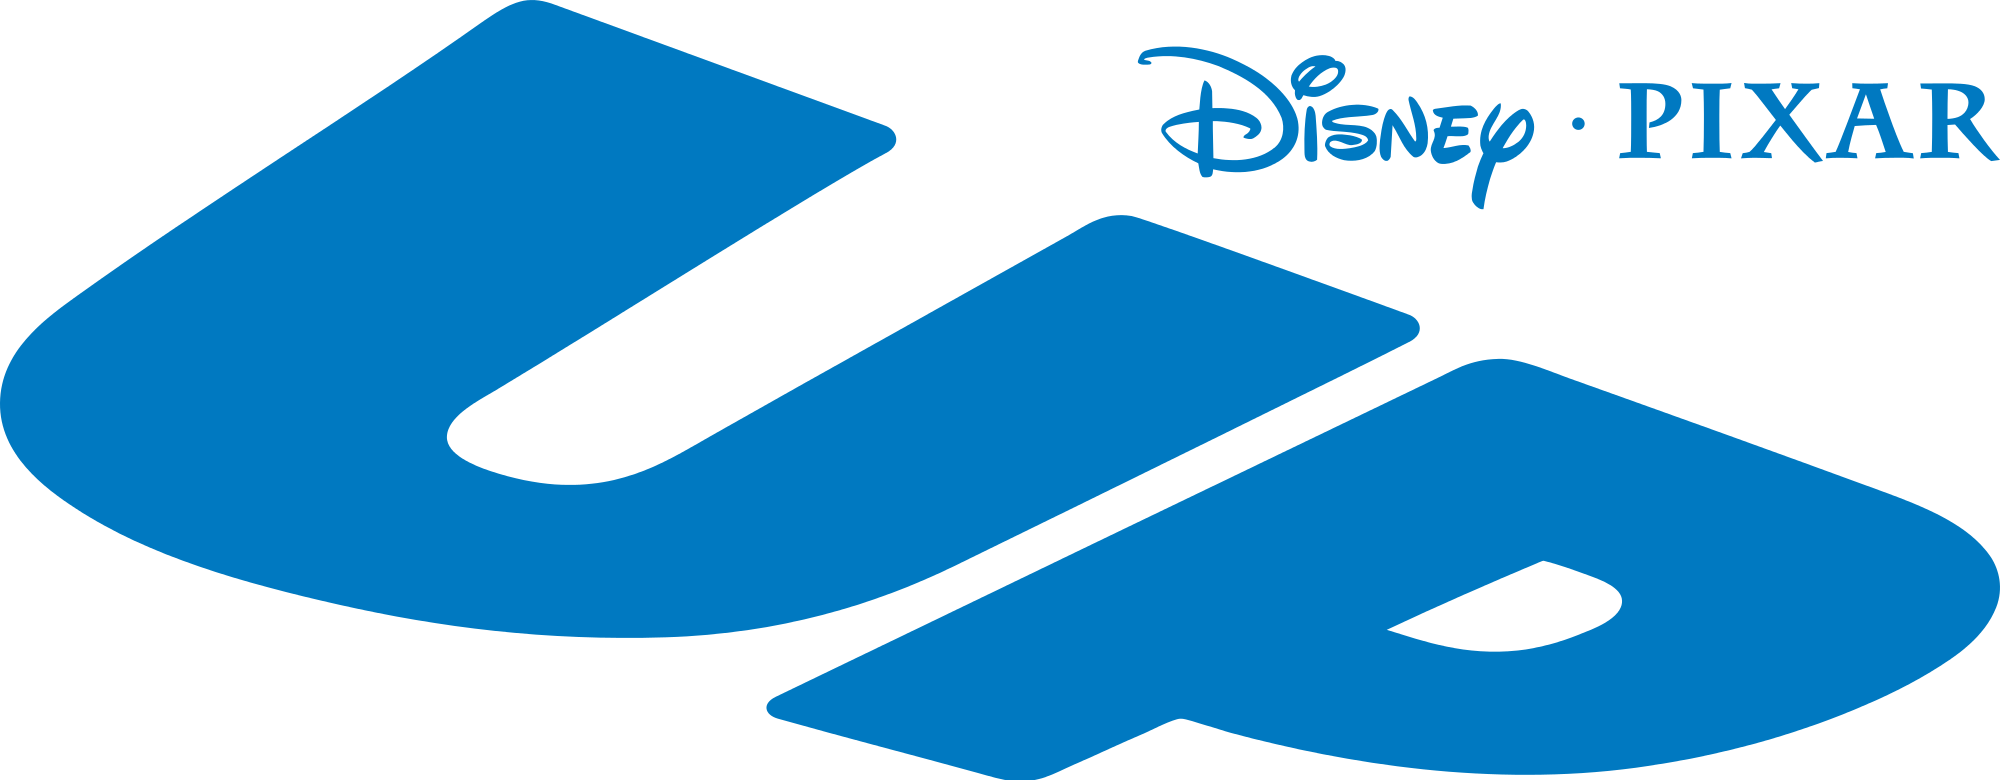 Pixar Movie Logo - File:Up (2009 film) logo.svg - Wikimedia Commons